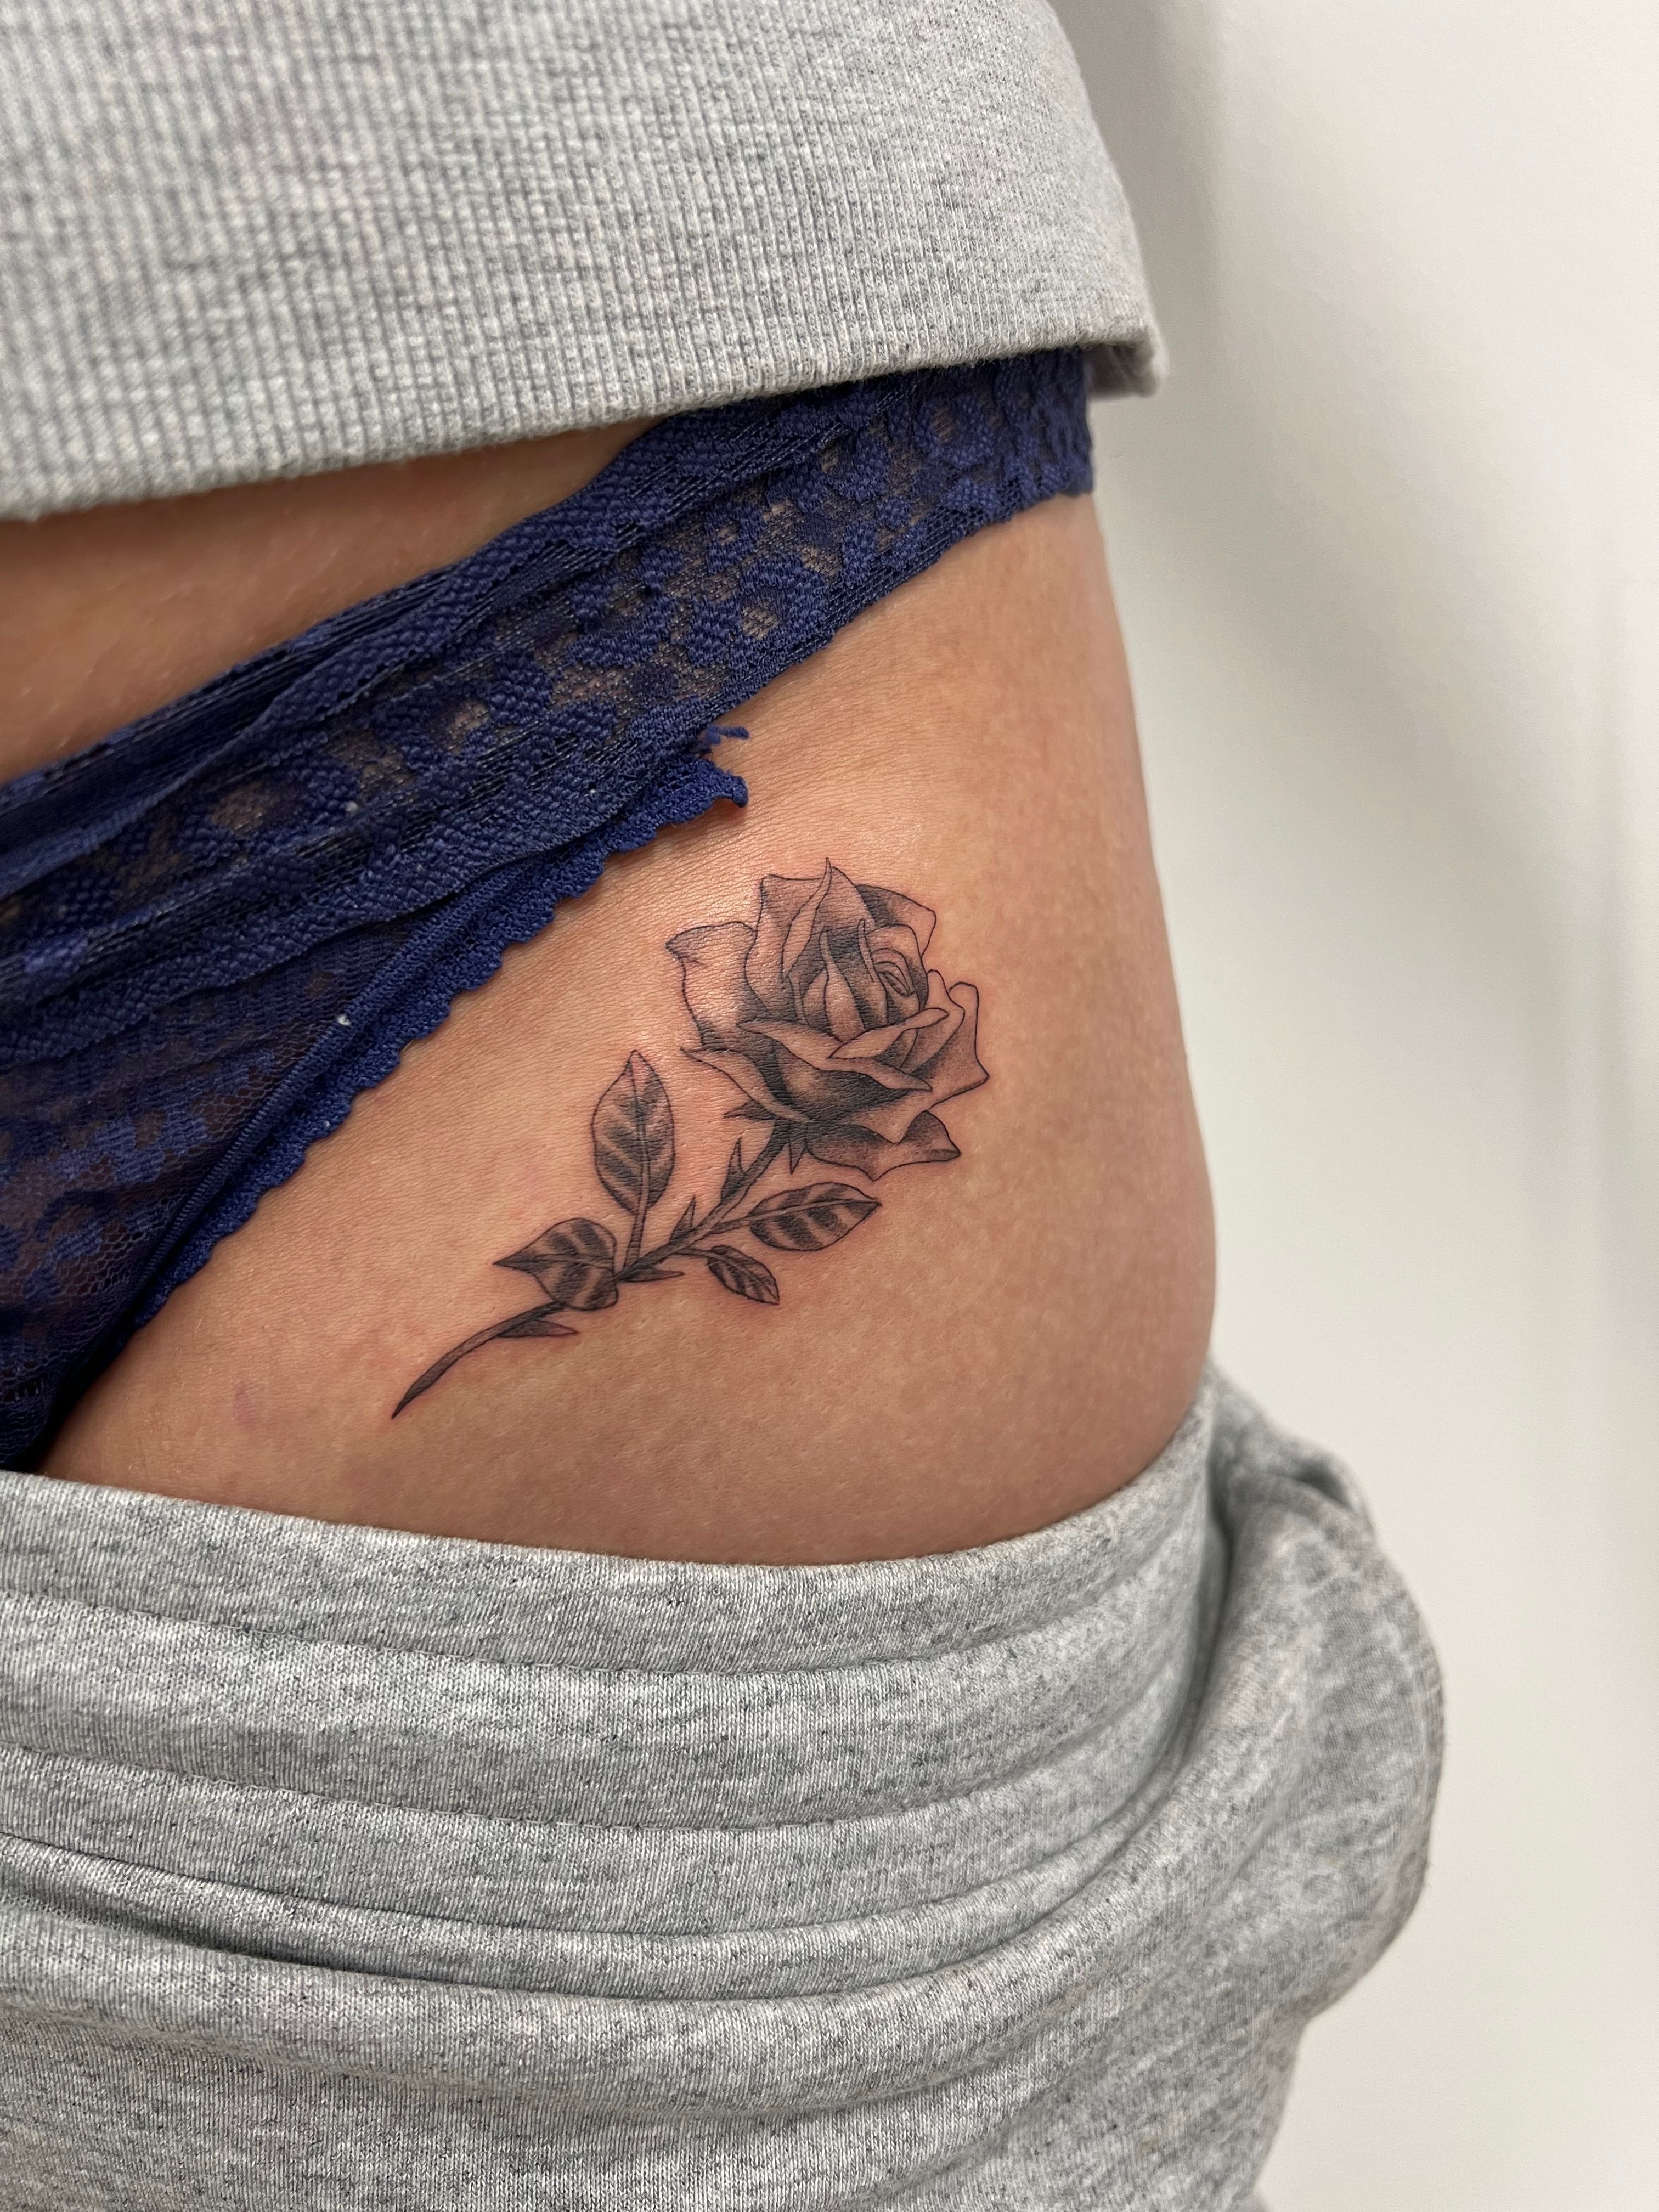 Dark rose tattoo on lower rib and hip